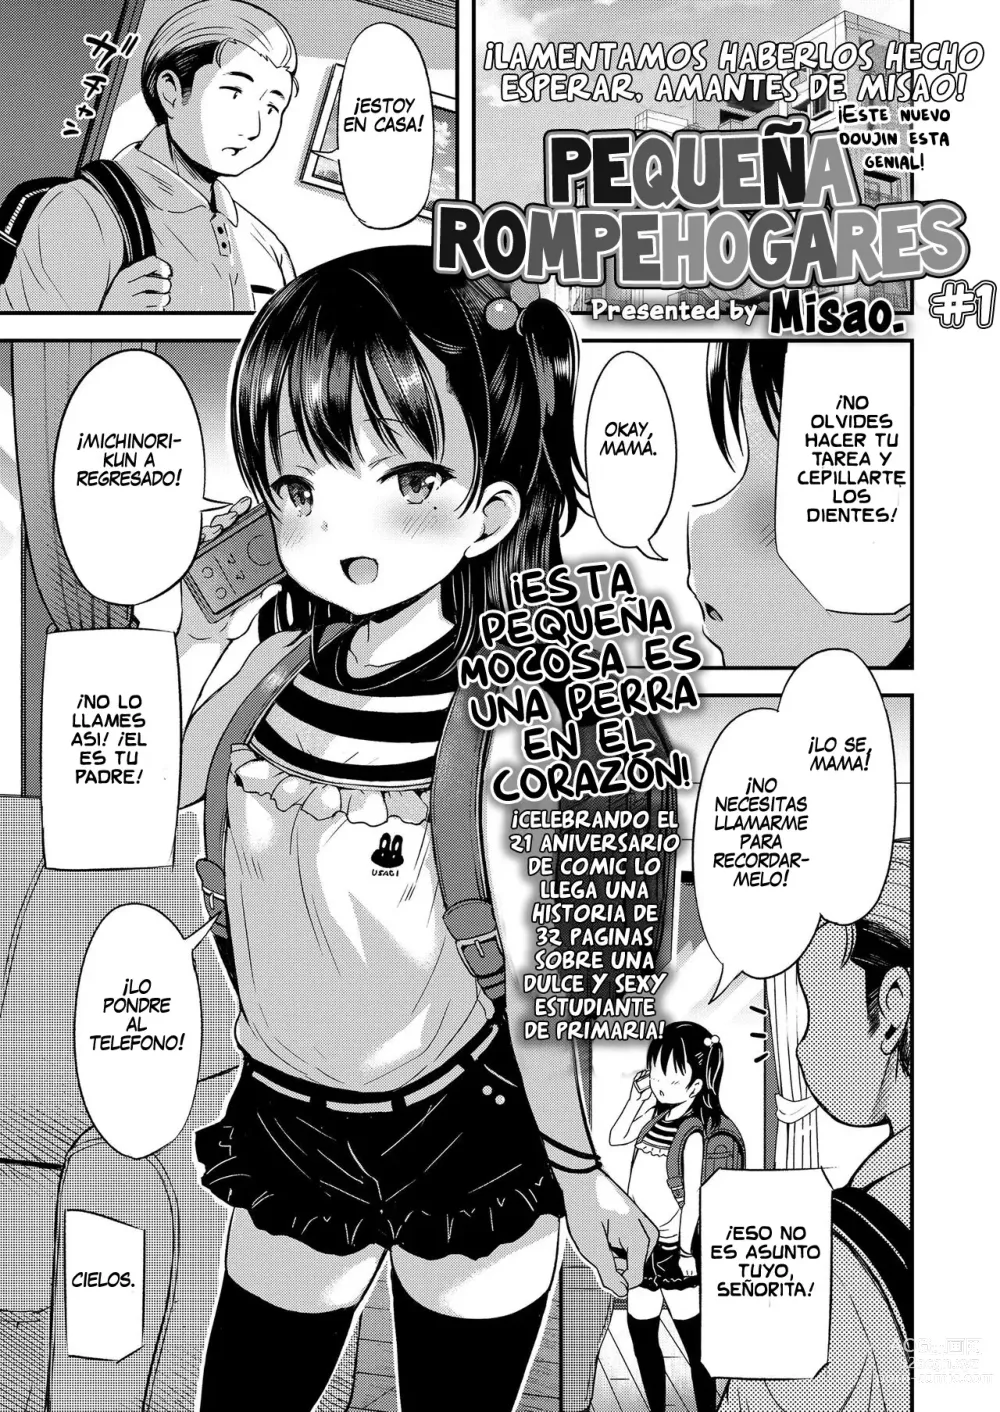 Page 1 of manga Pequeña Rompehogares #1